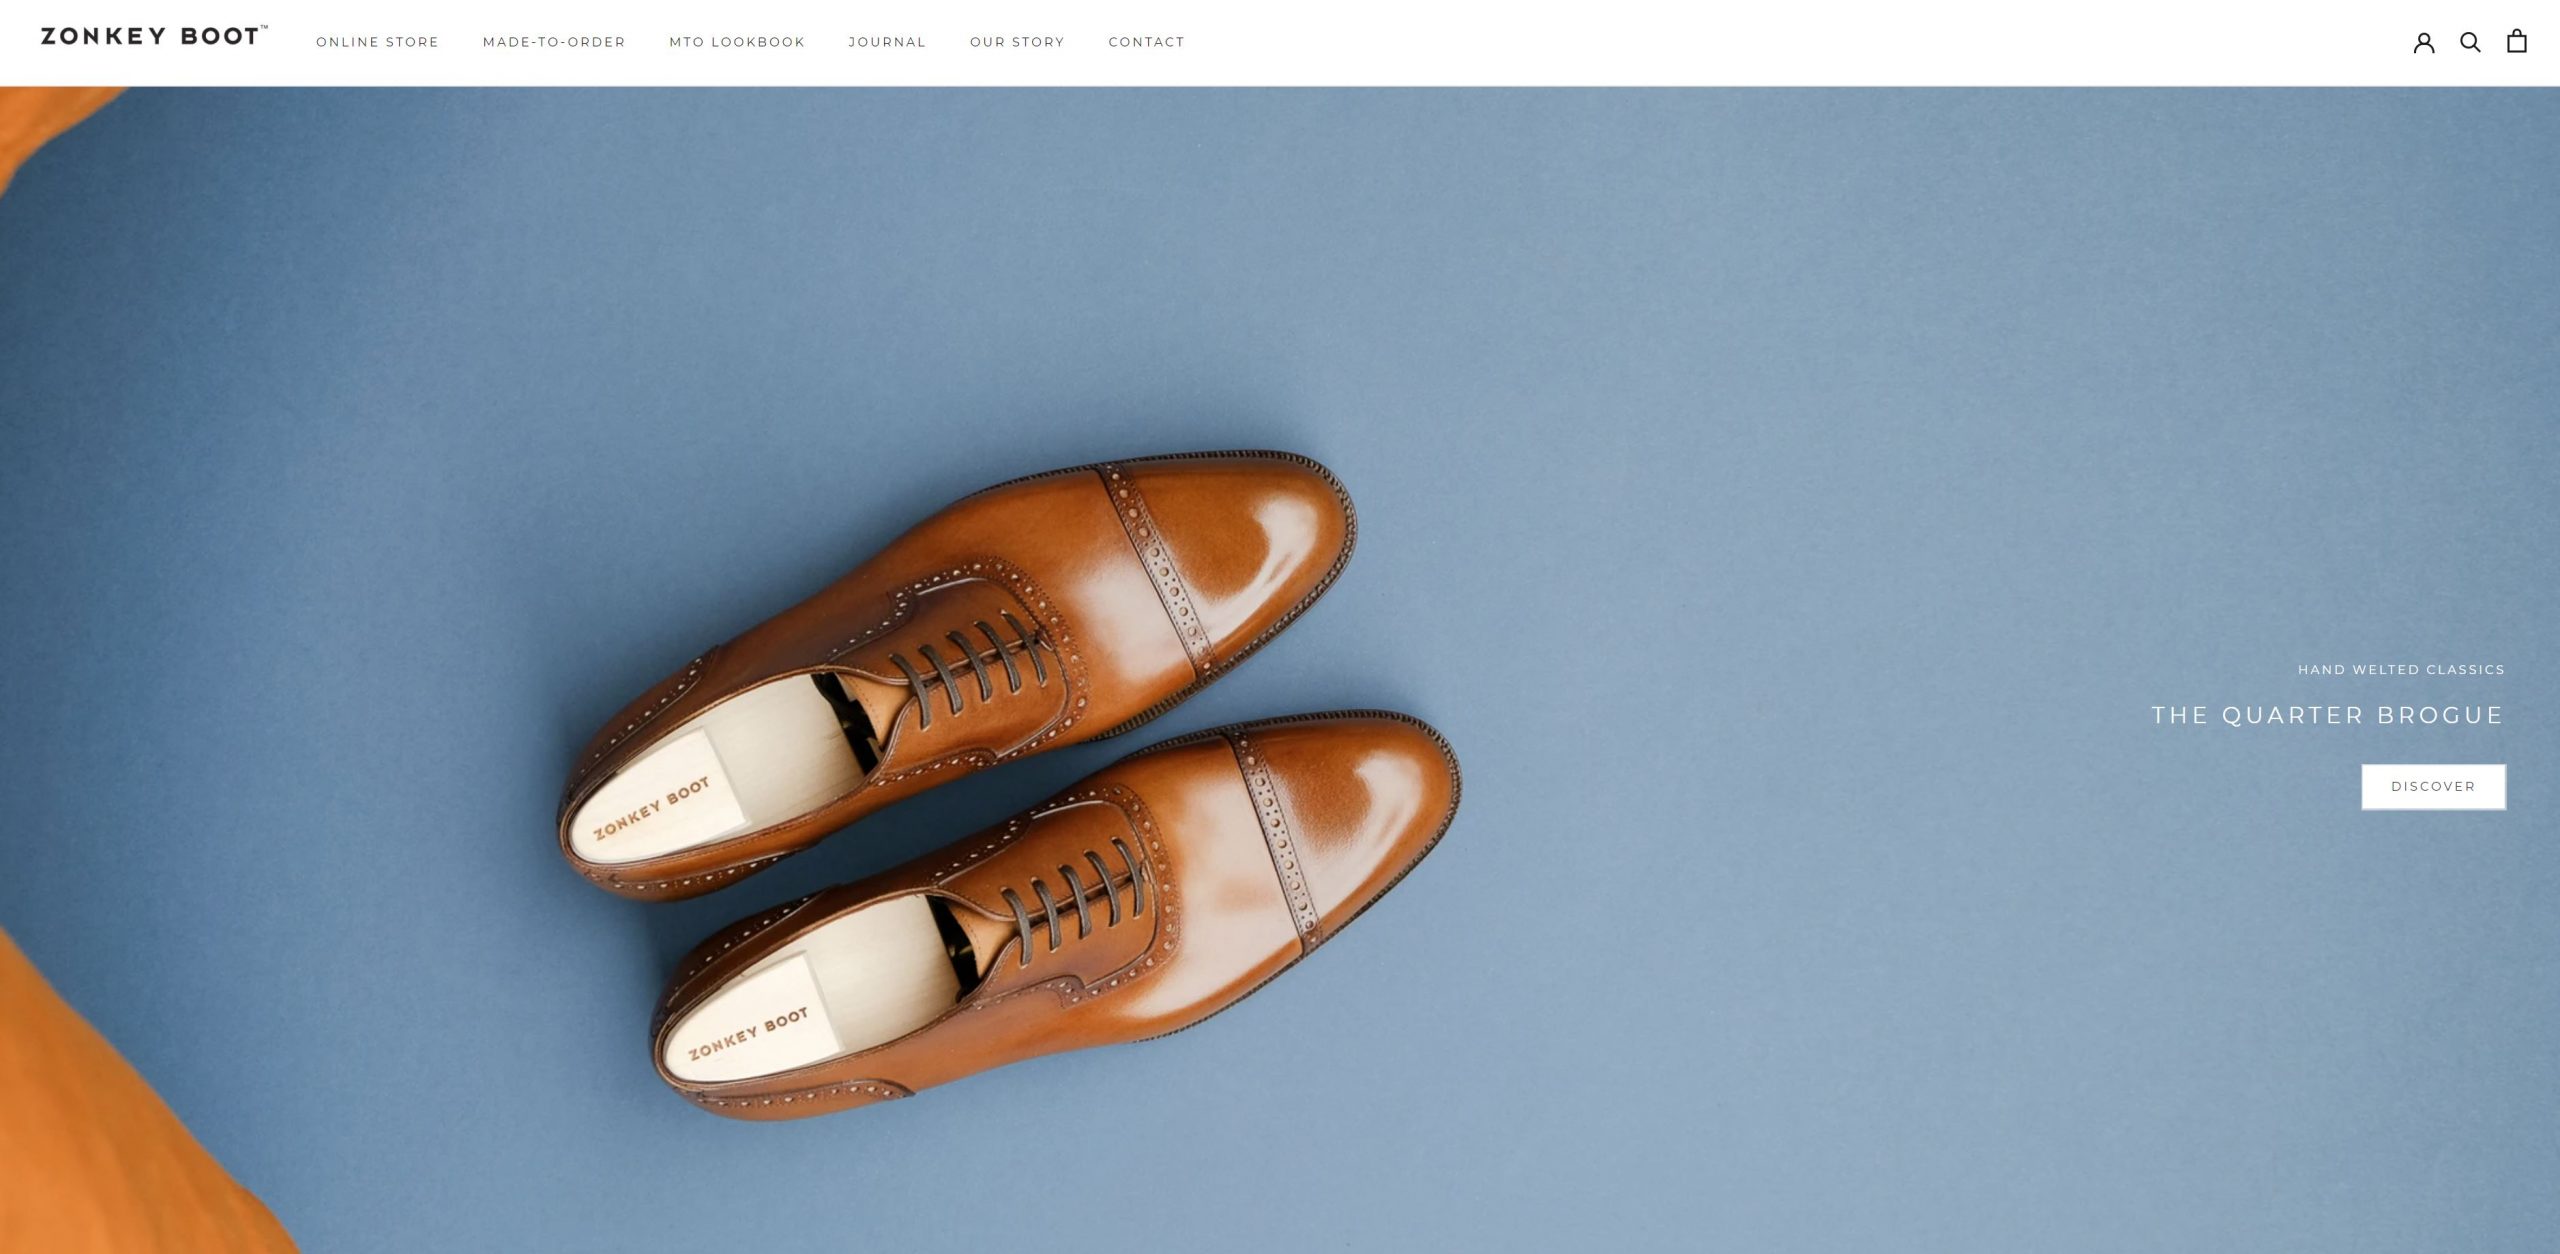 welted shoe news october 2020 - zonkey boot website